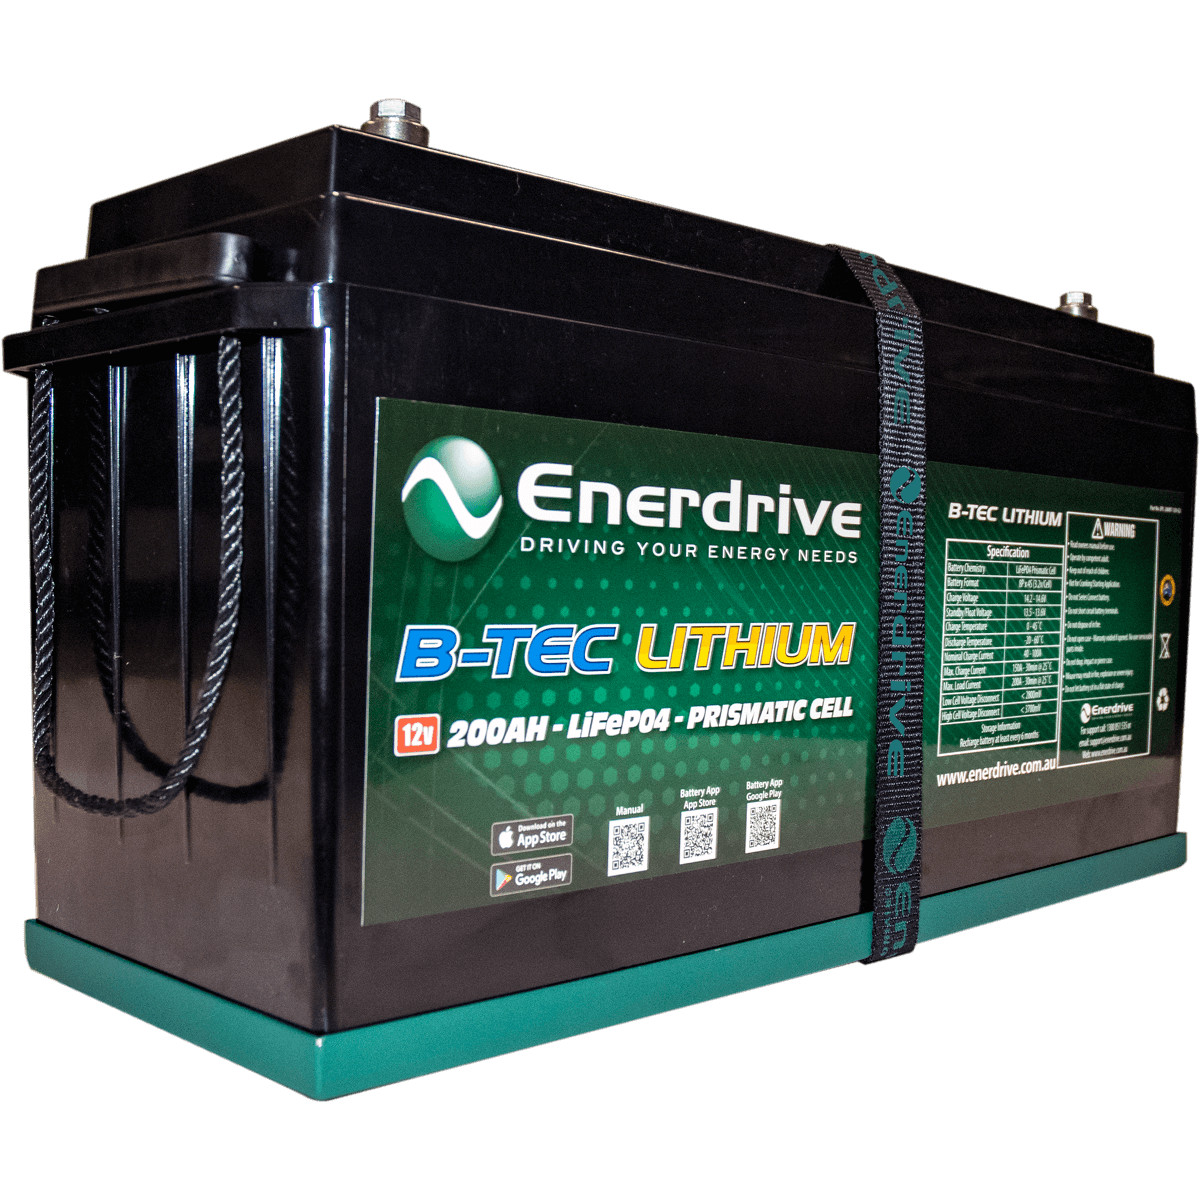 Product shot of the Enerdrive B-TEC 12V 200Ah G2 Lithium Battery